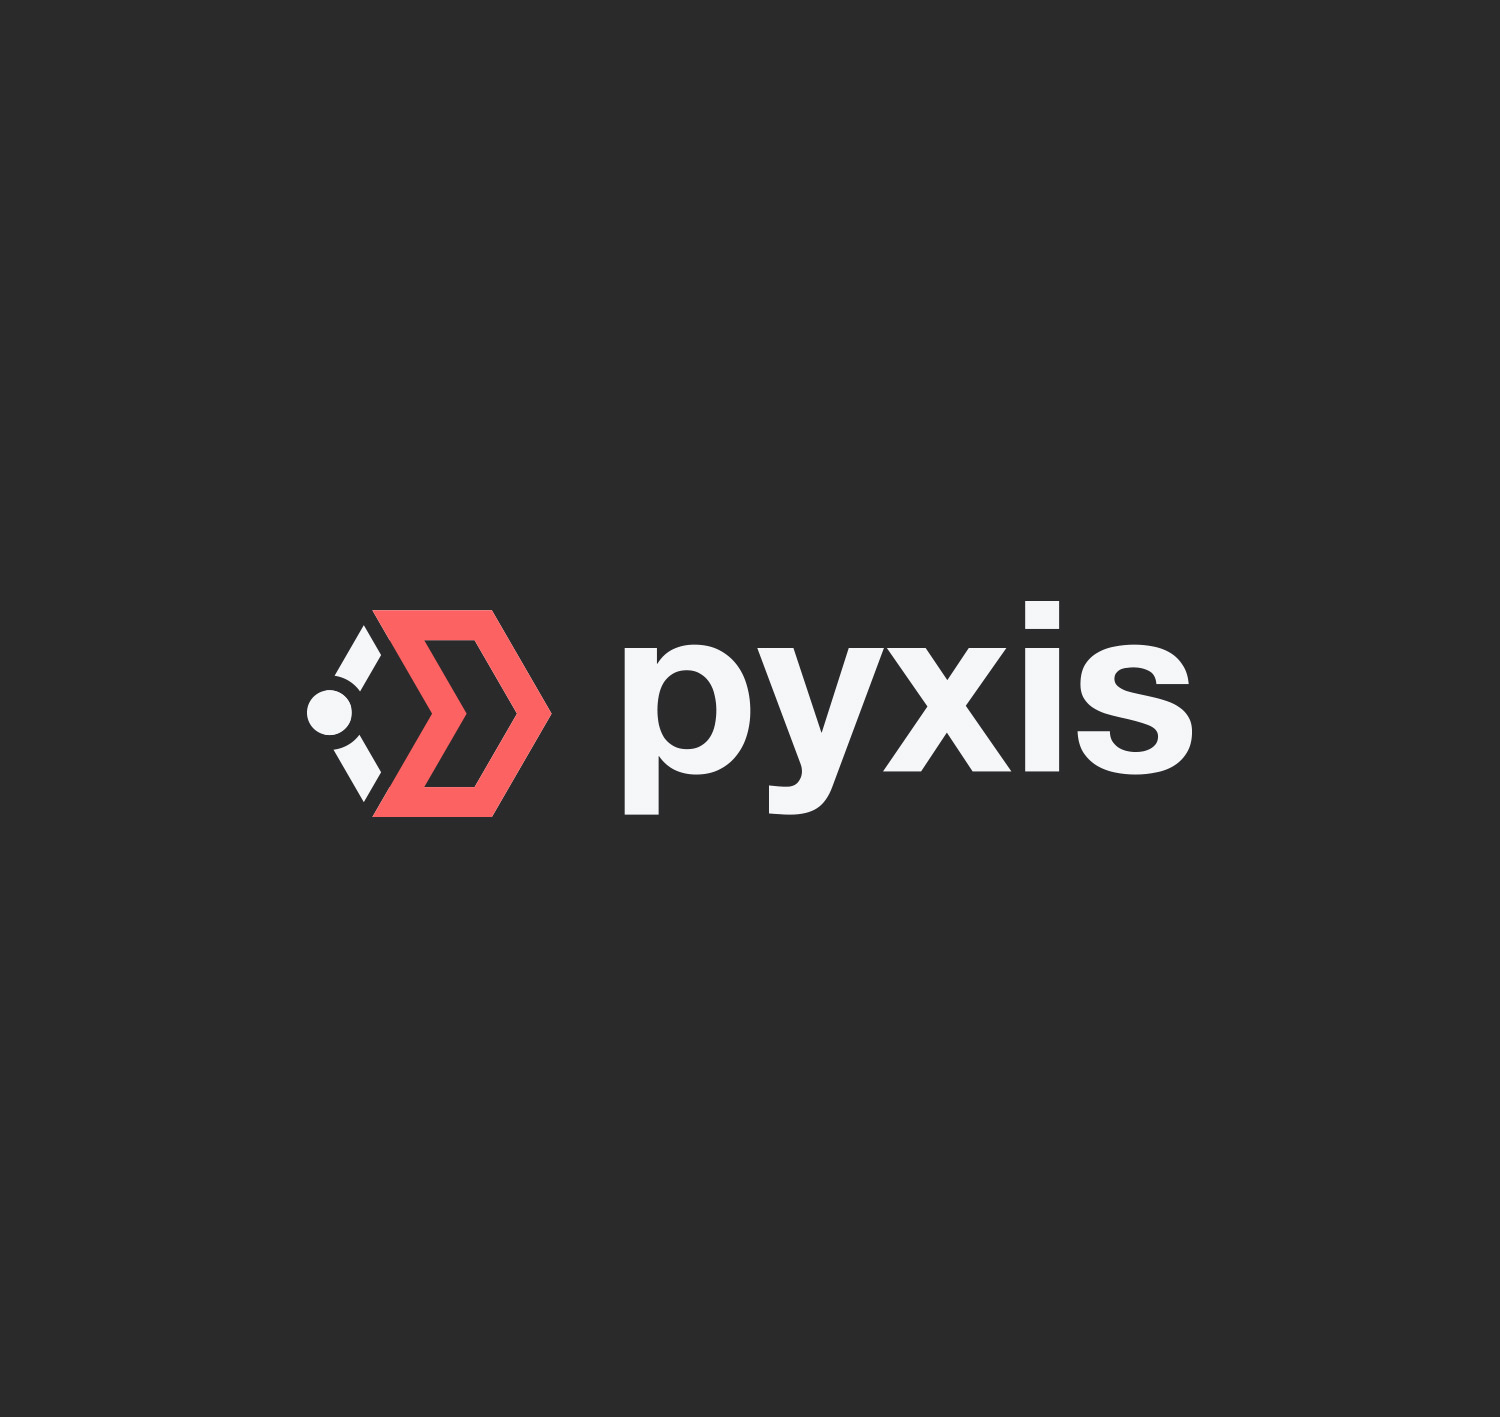 Image of pyxis logo on dark gray background